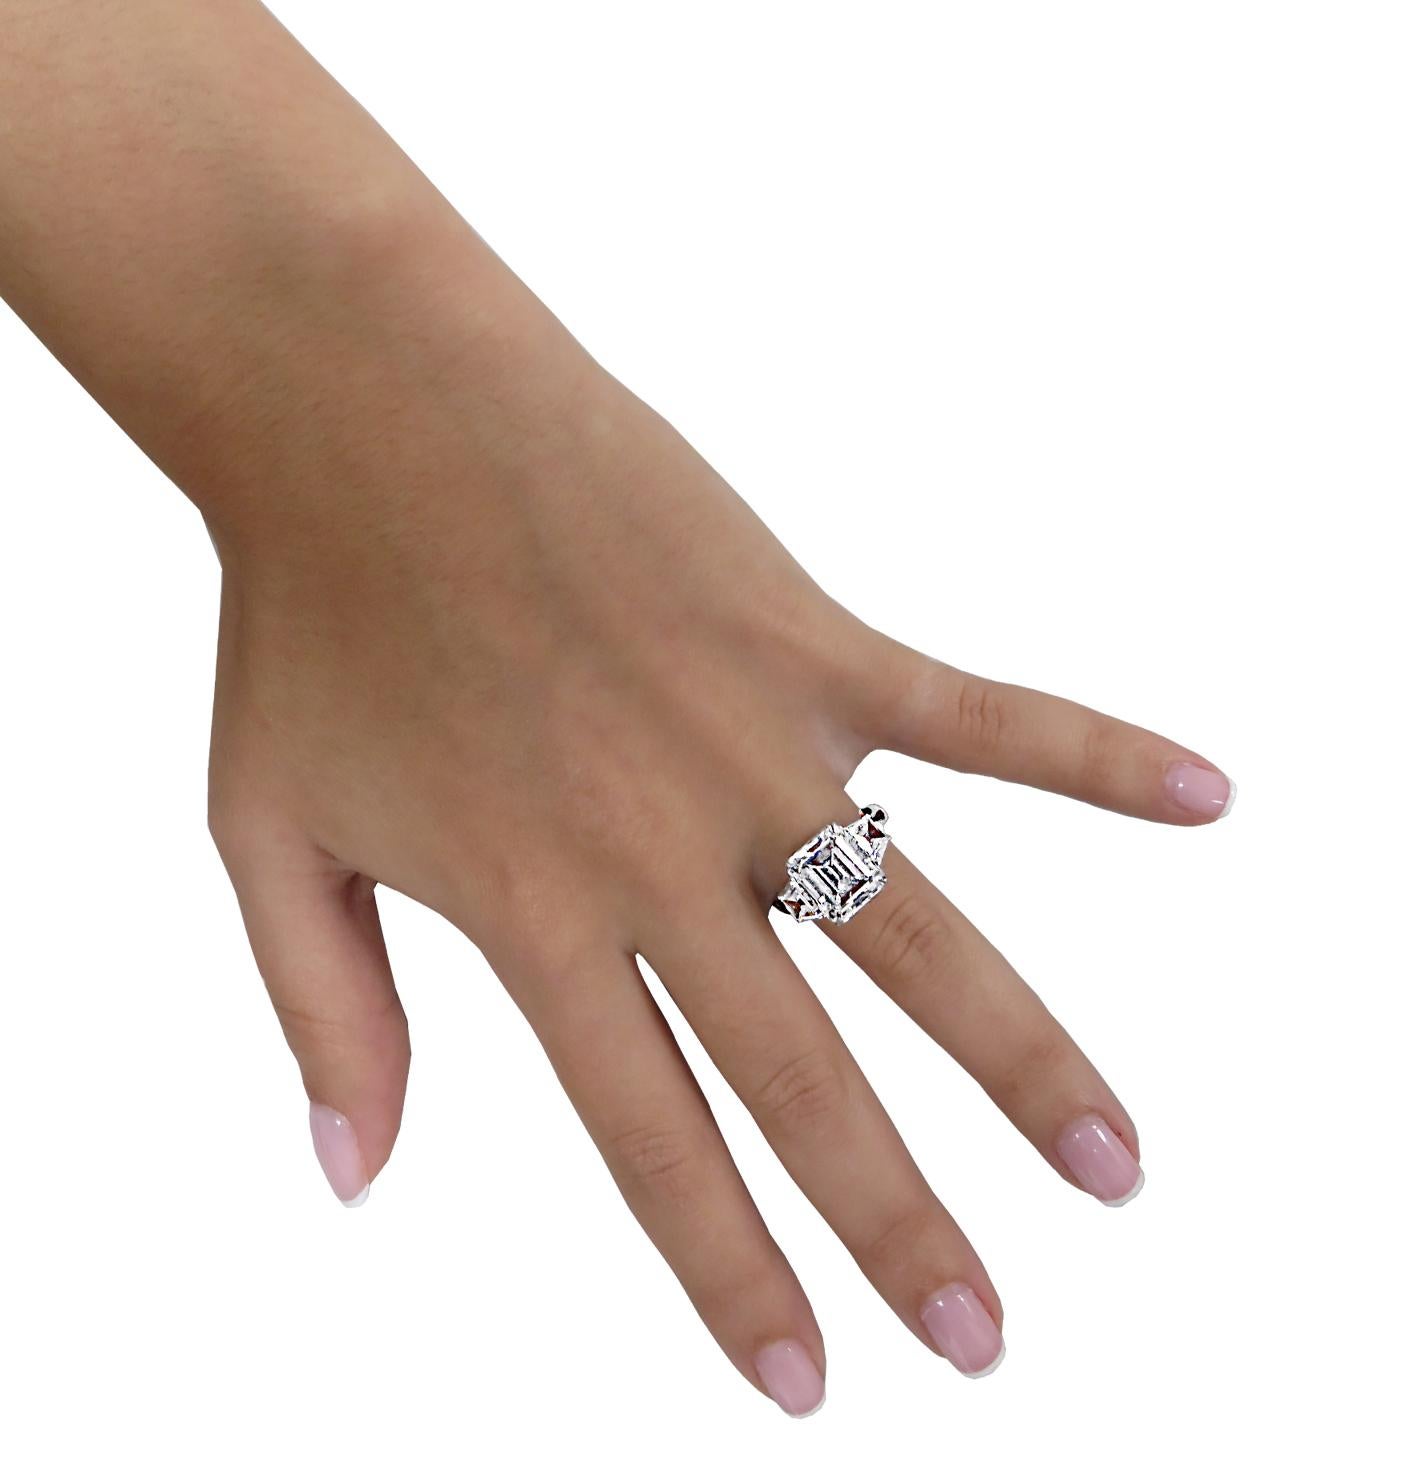 Modern Vivid Diamonds GIA Certified 7.01 Carat Emerald Cut Diamond Engagement Ring For Sale